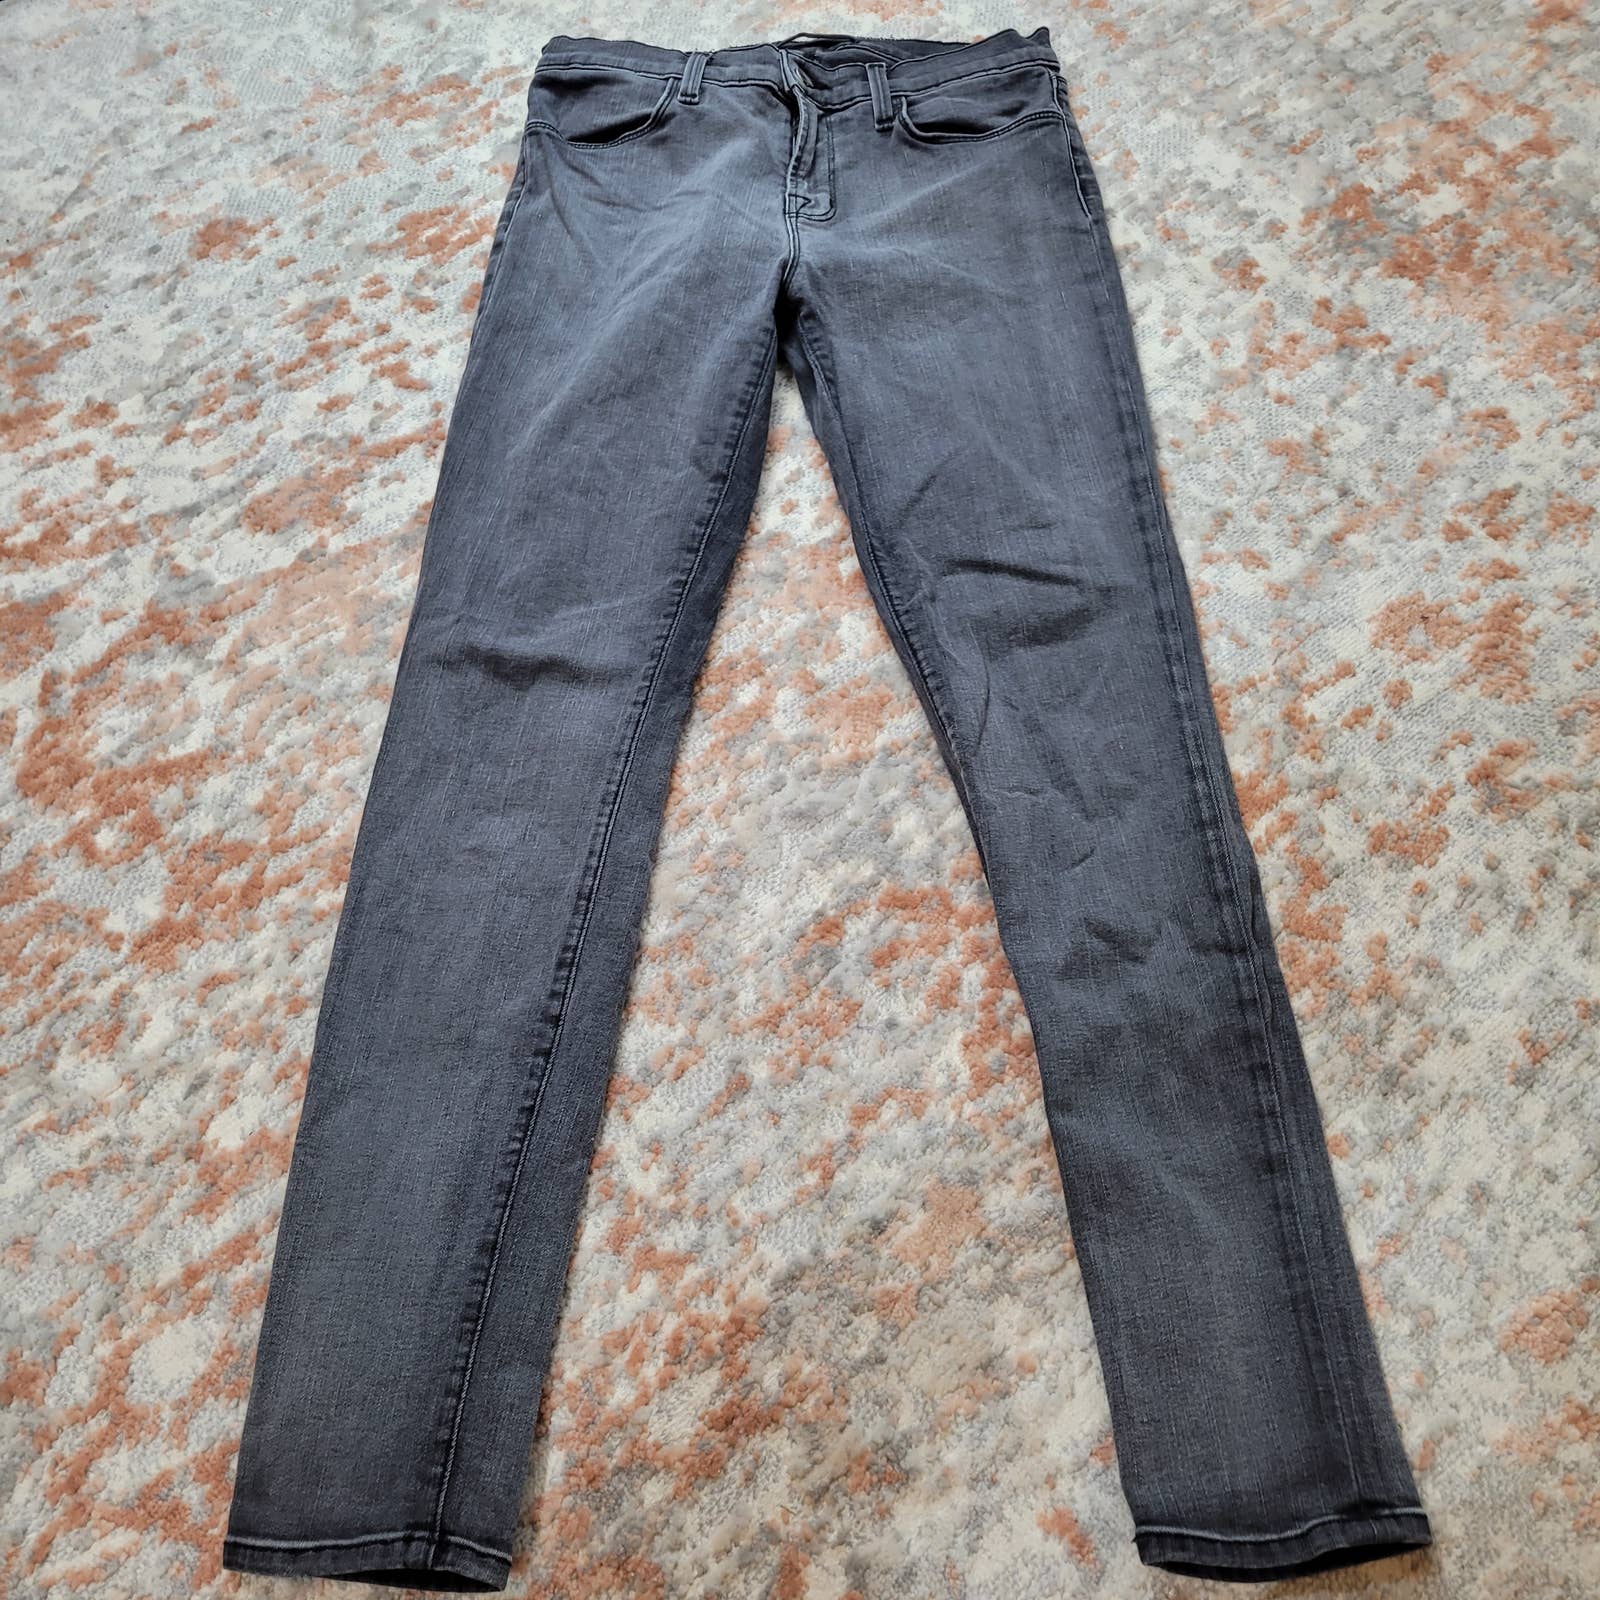 J Brand Super Skinny Prose Black Wash Jeans - Size 29Markita's ClosetJ Brand